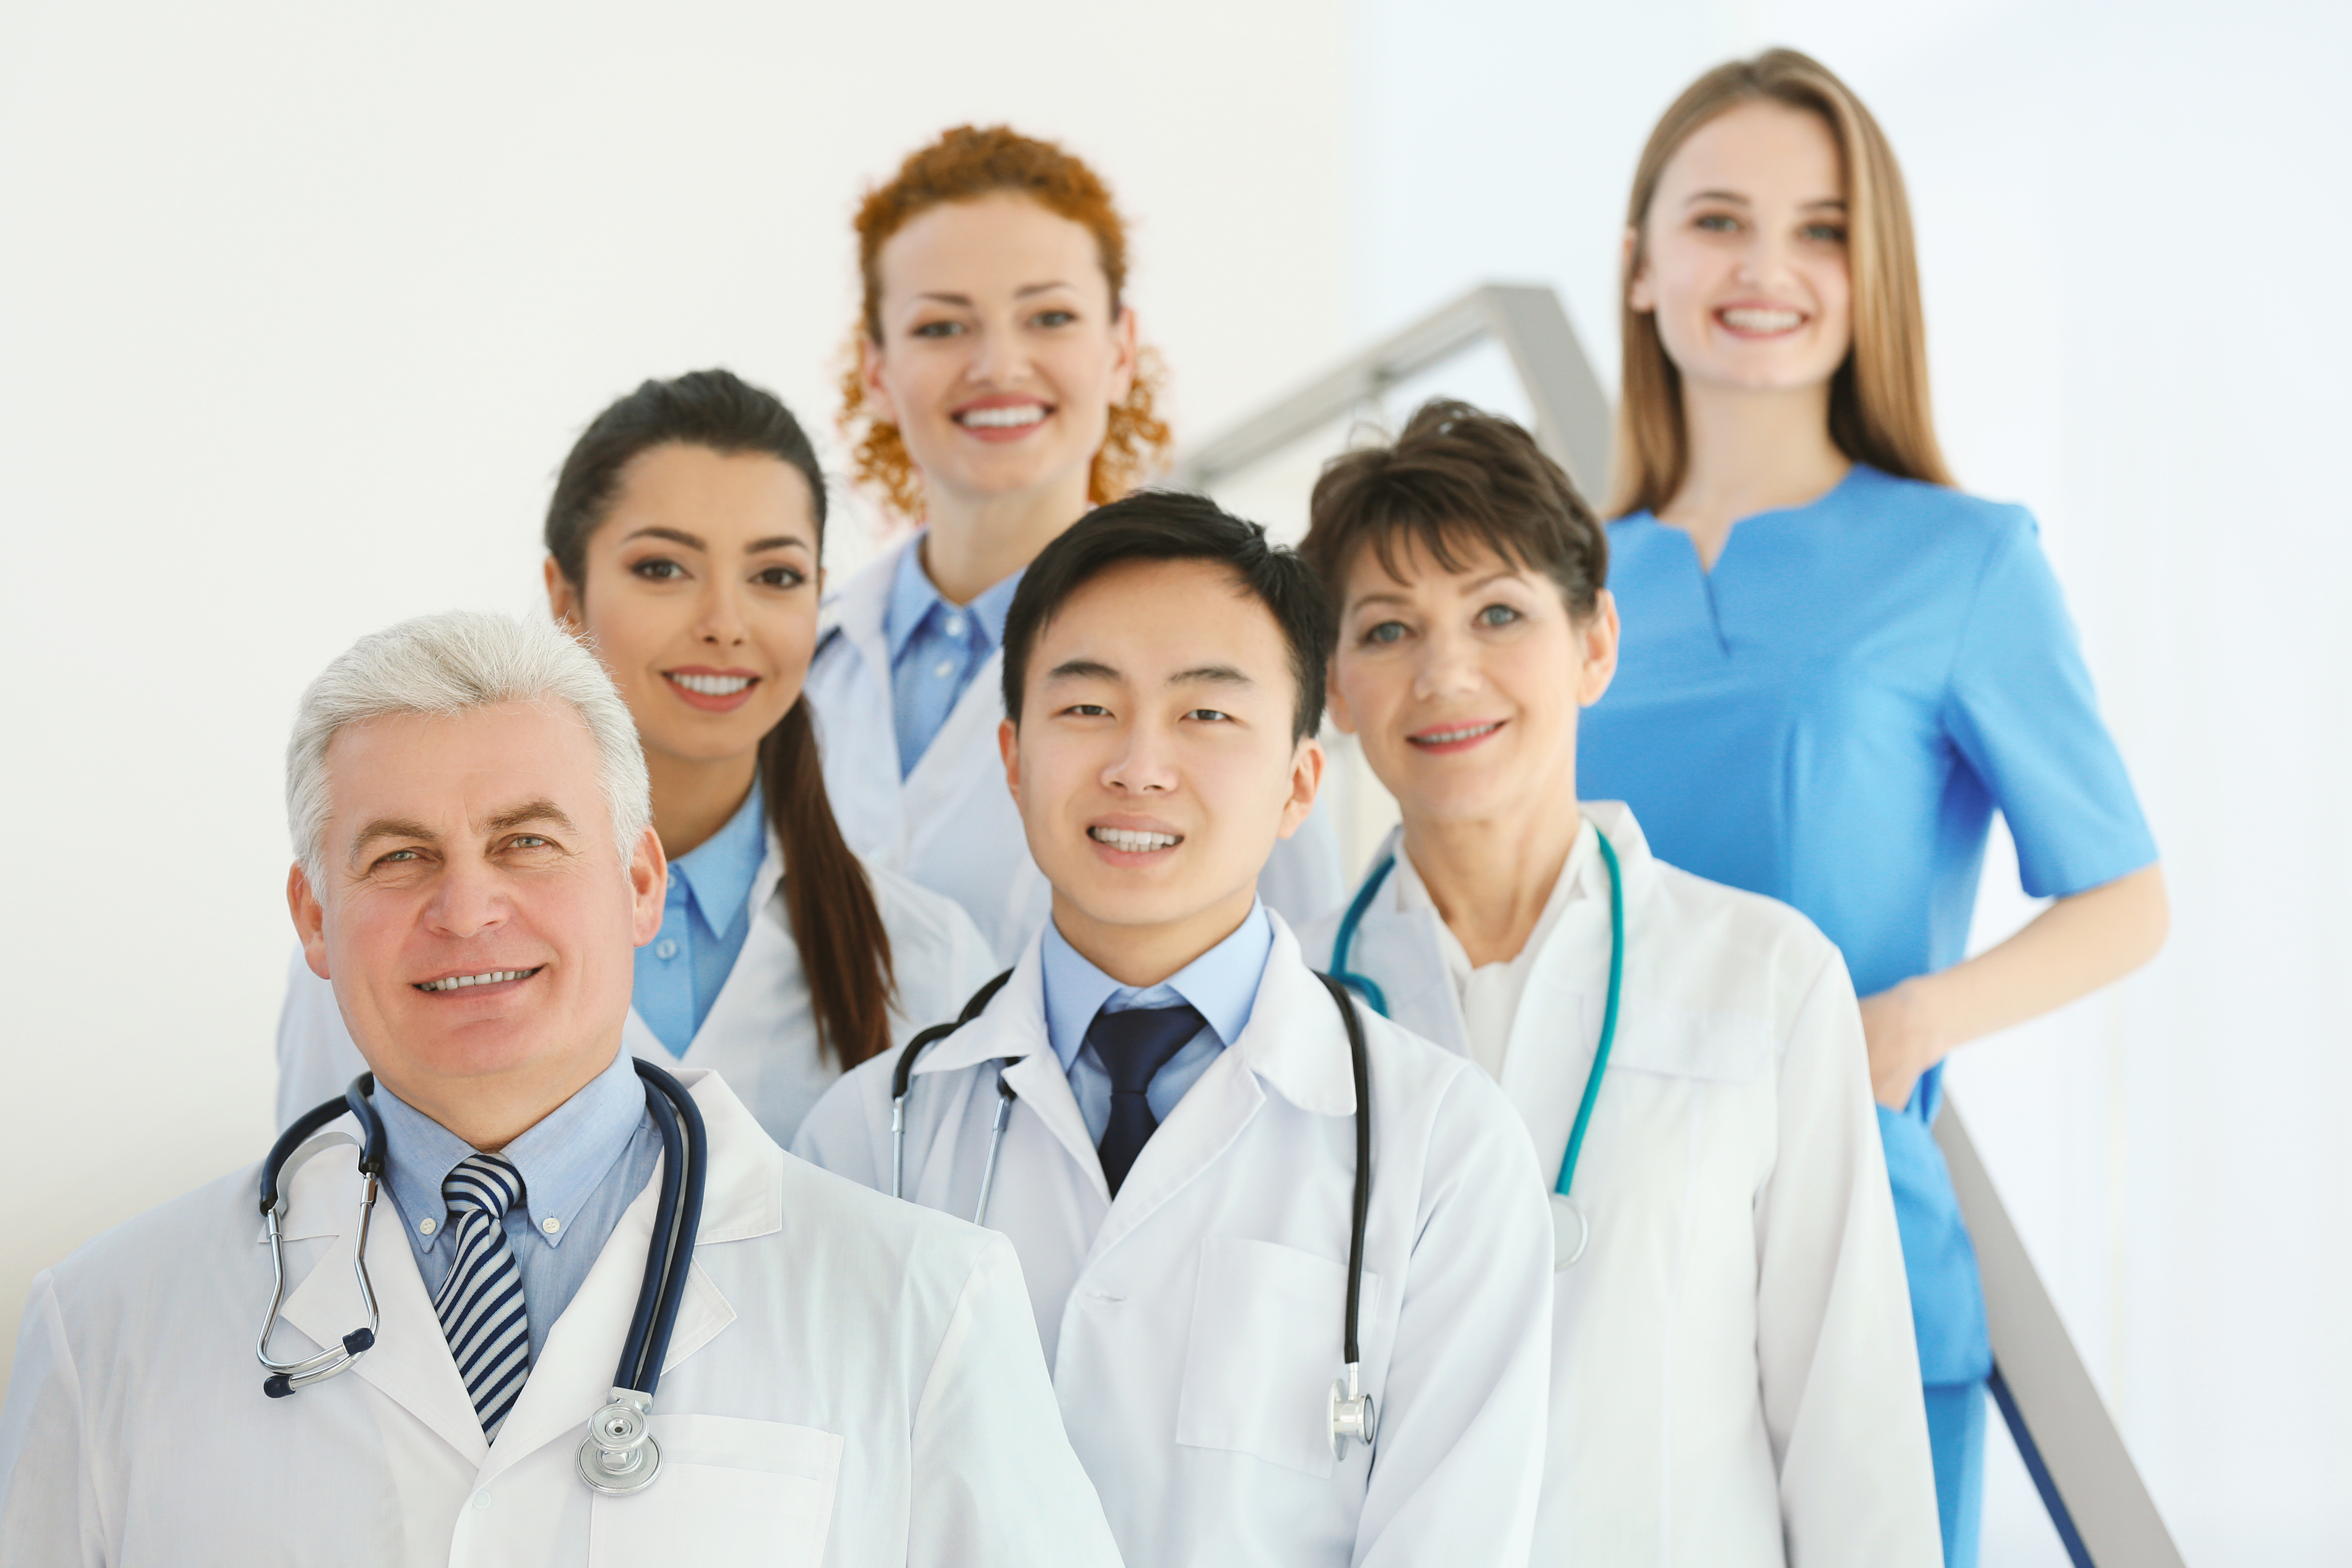 A diverse group of clinicians